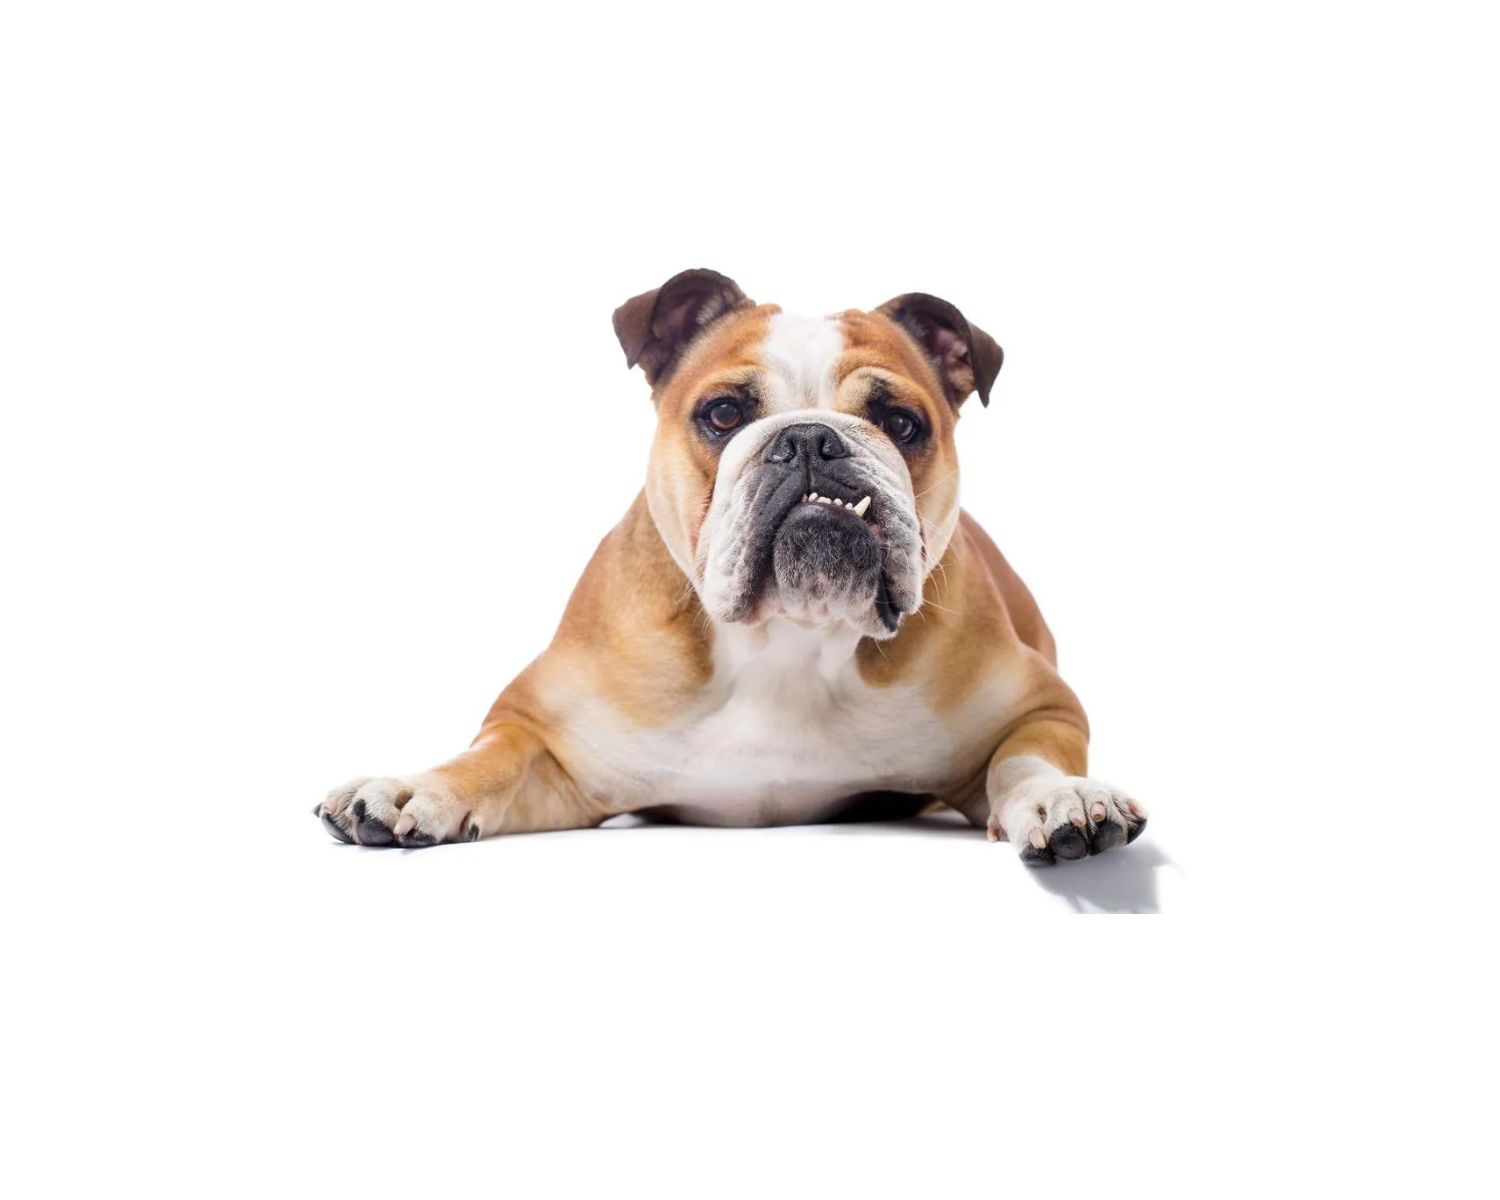 English Bulldog (character, nutrition, care)